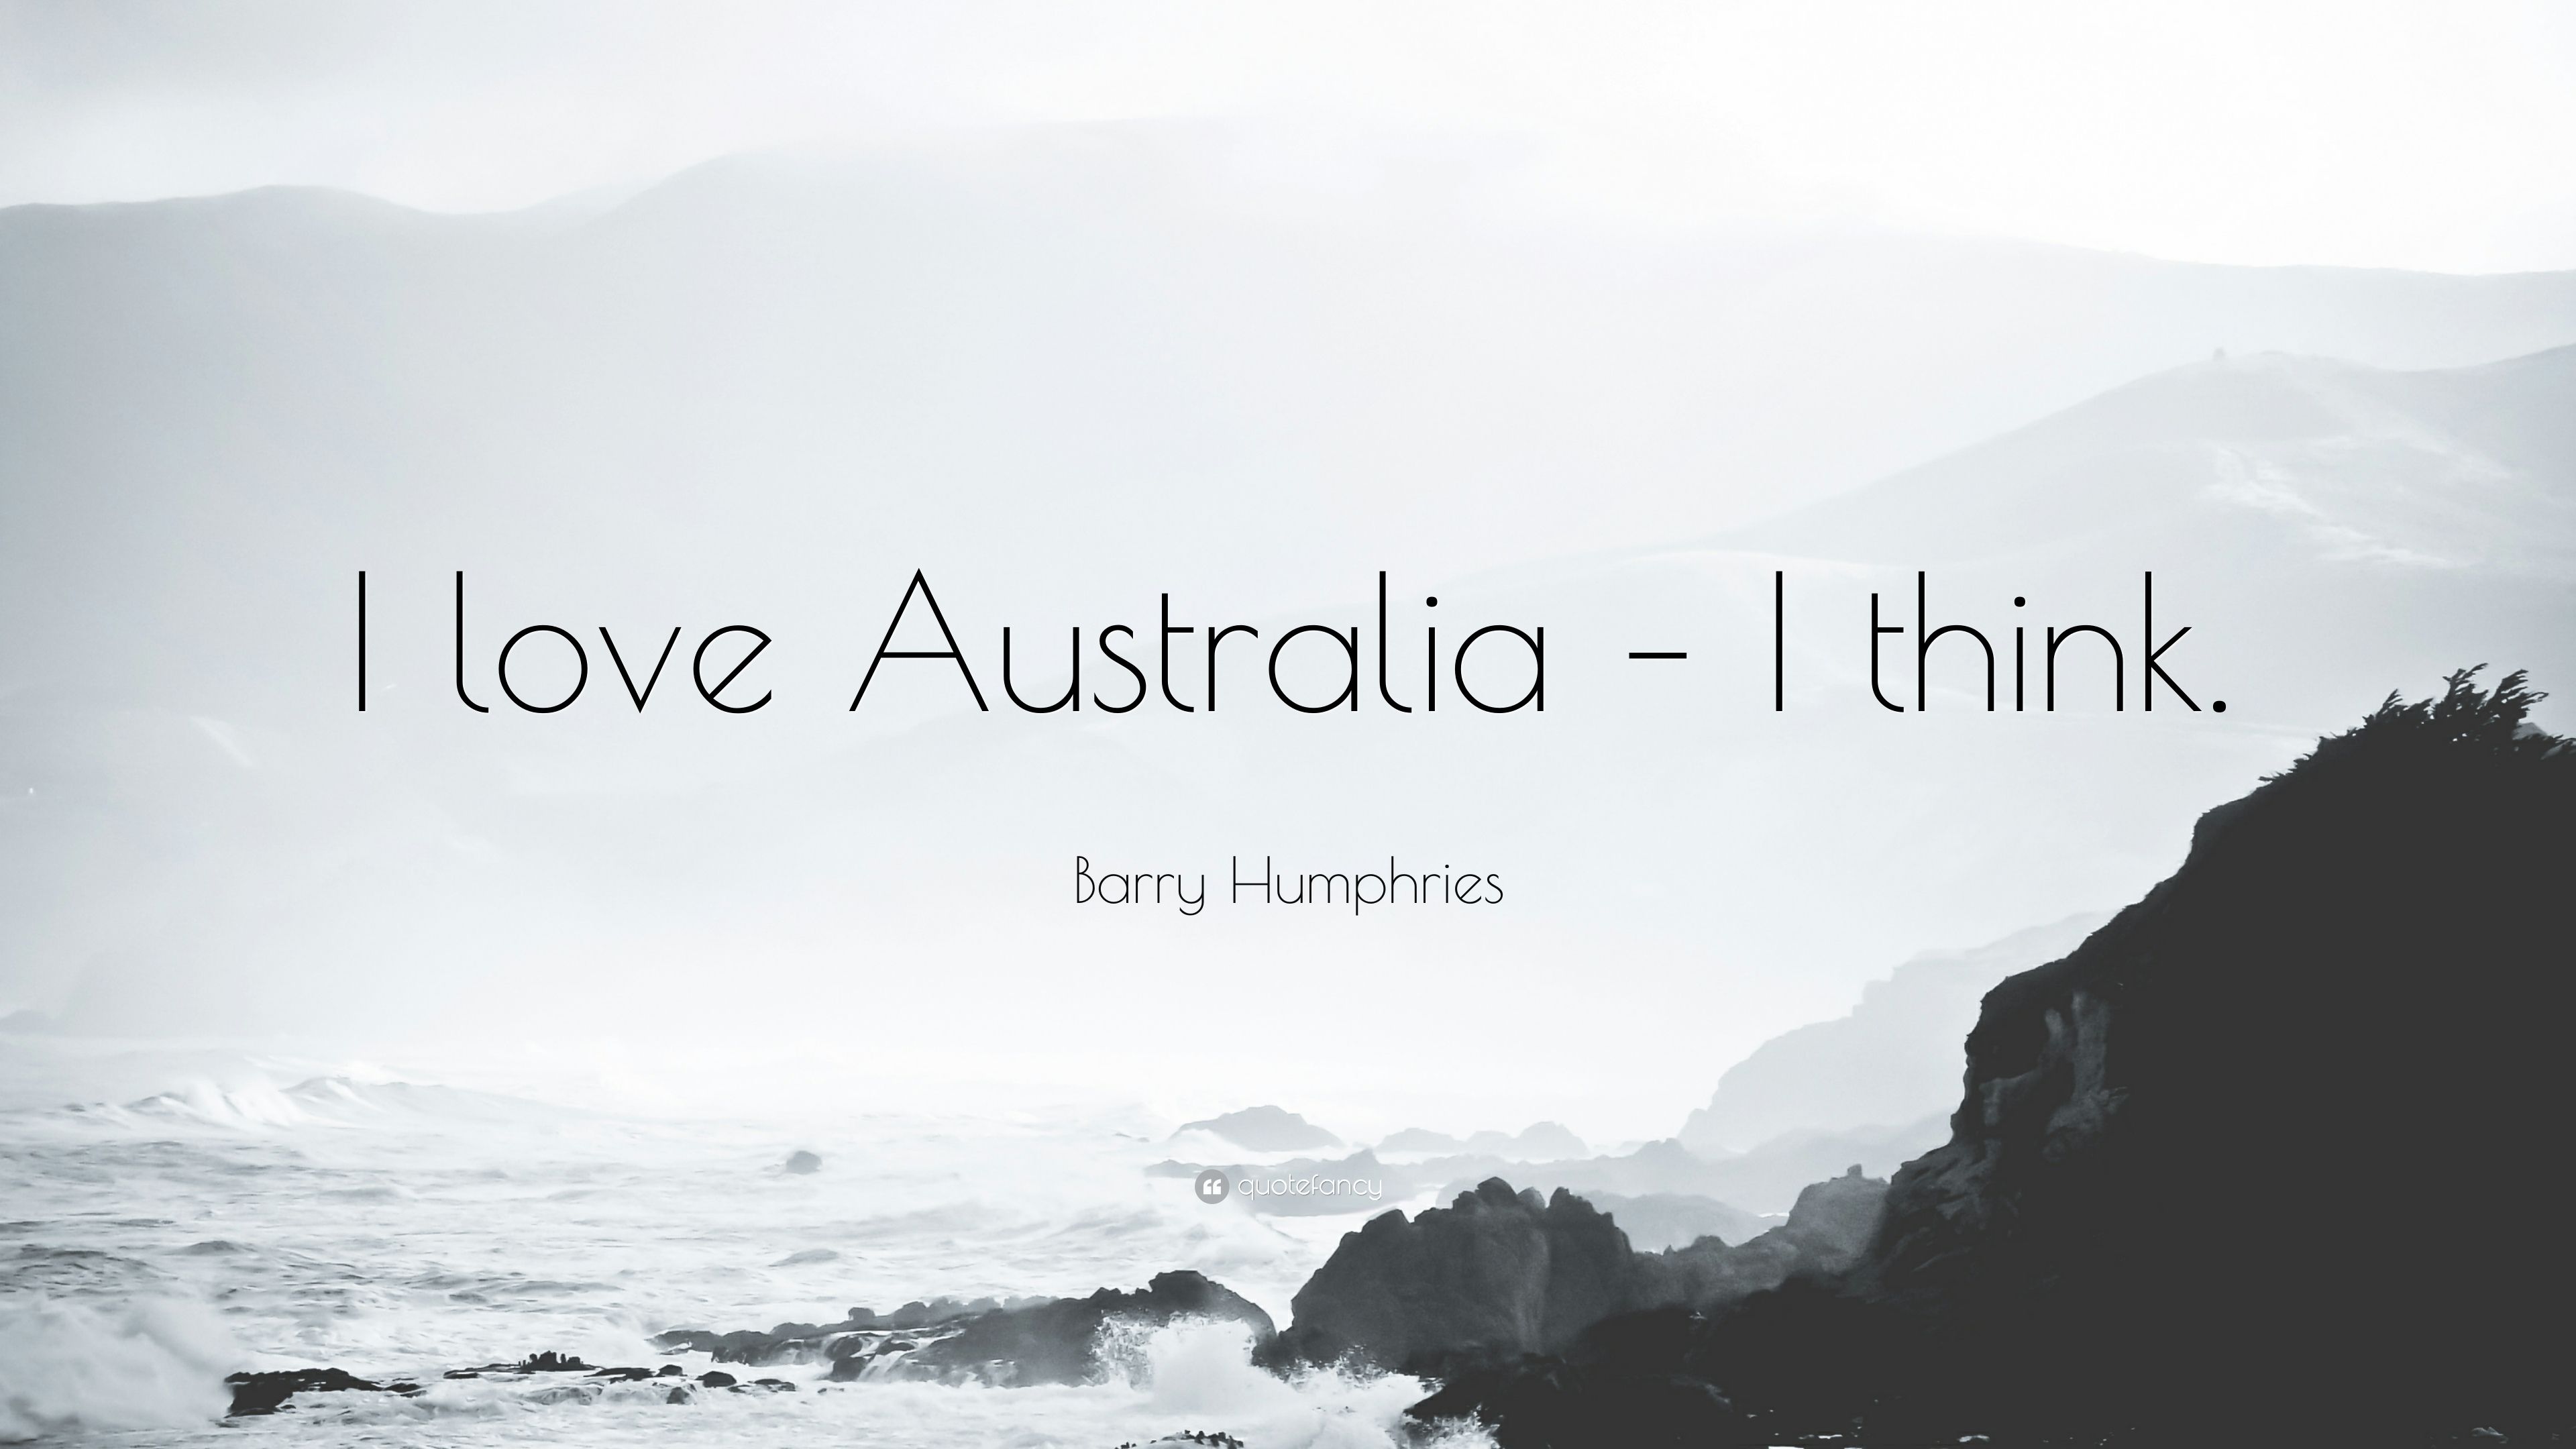 Barry Humphries Quote: “I love Australia